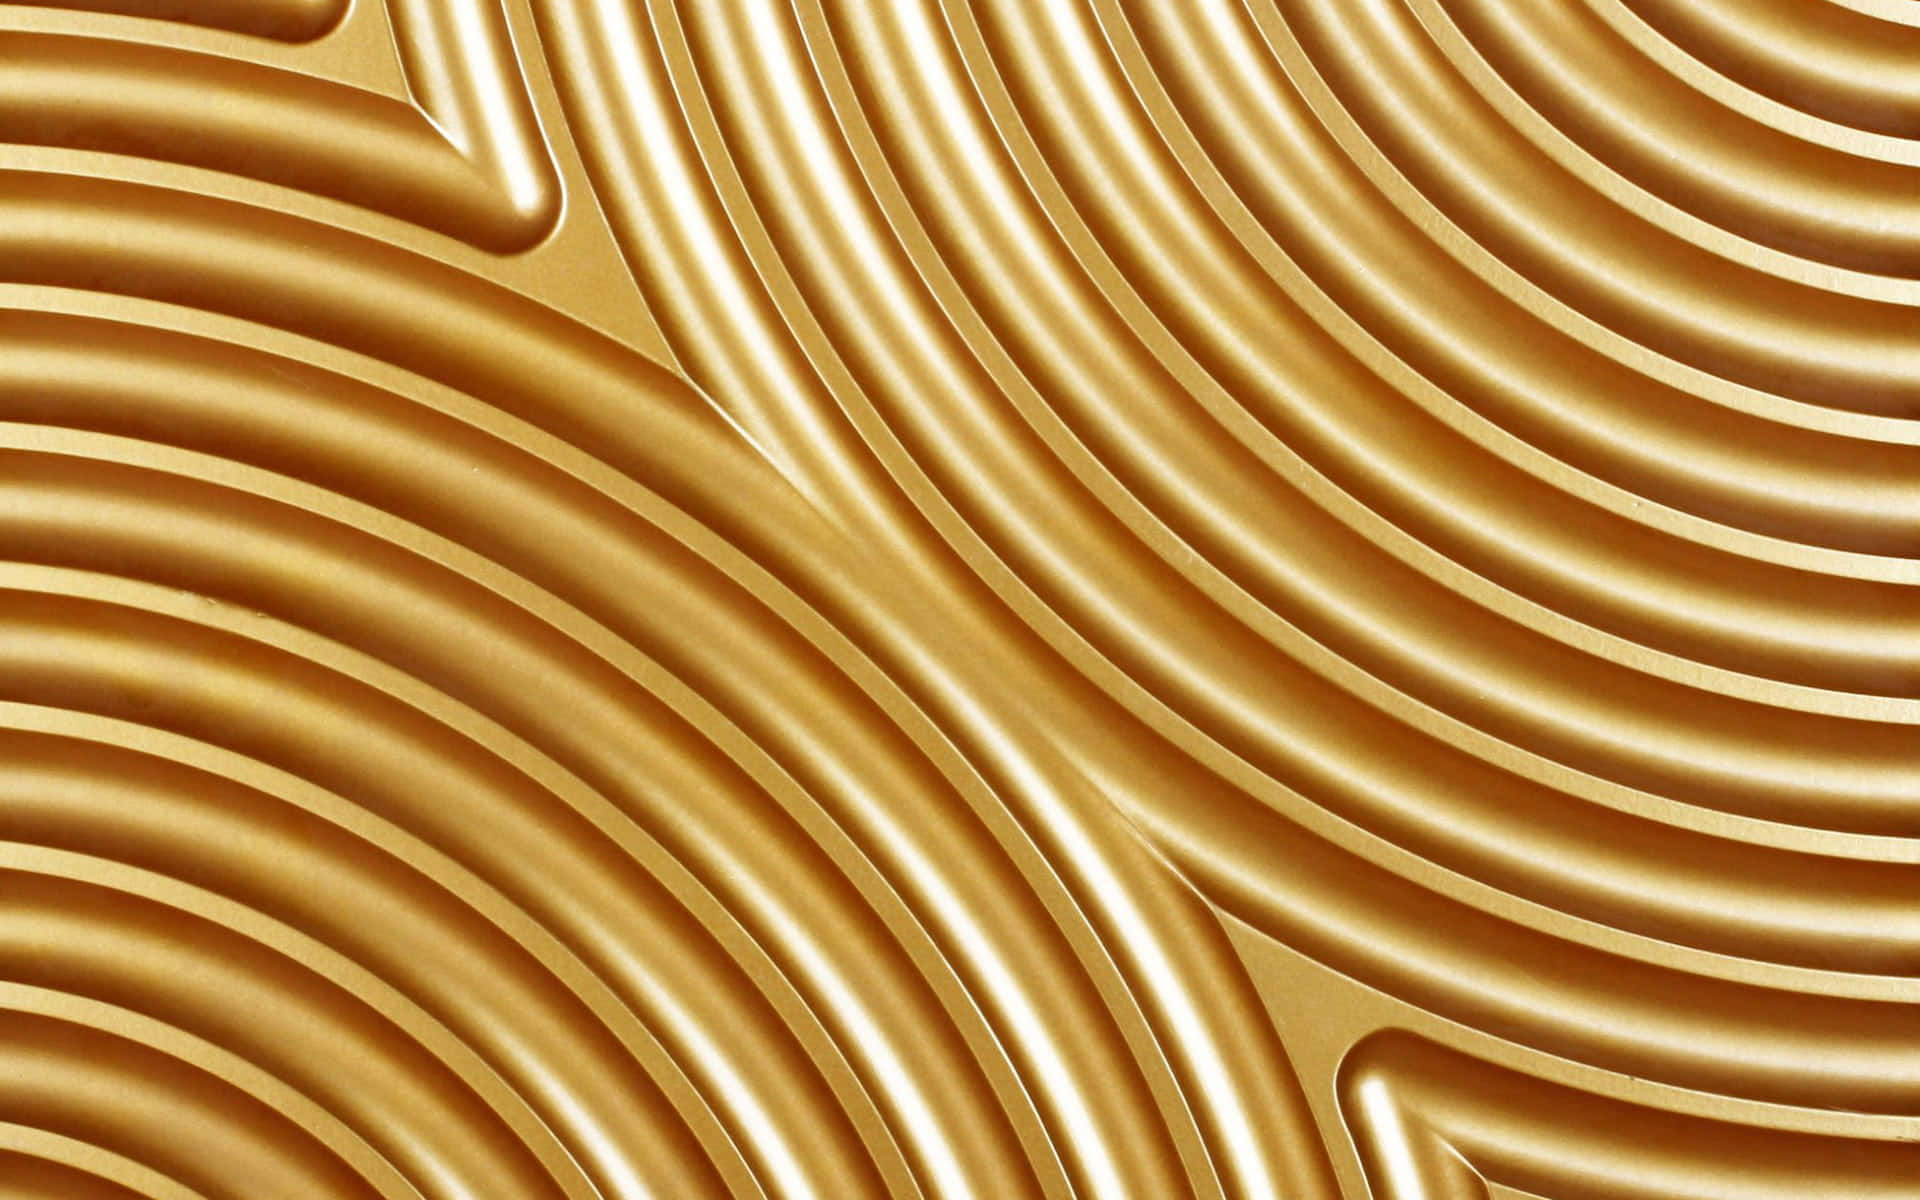 3D Golden Metal Waves Background